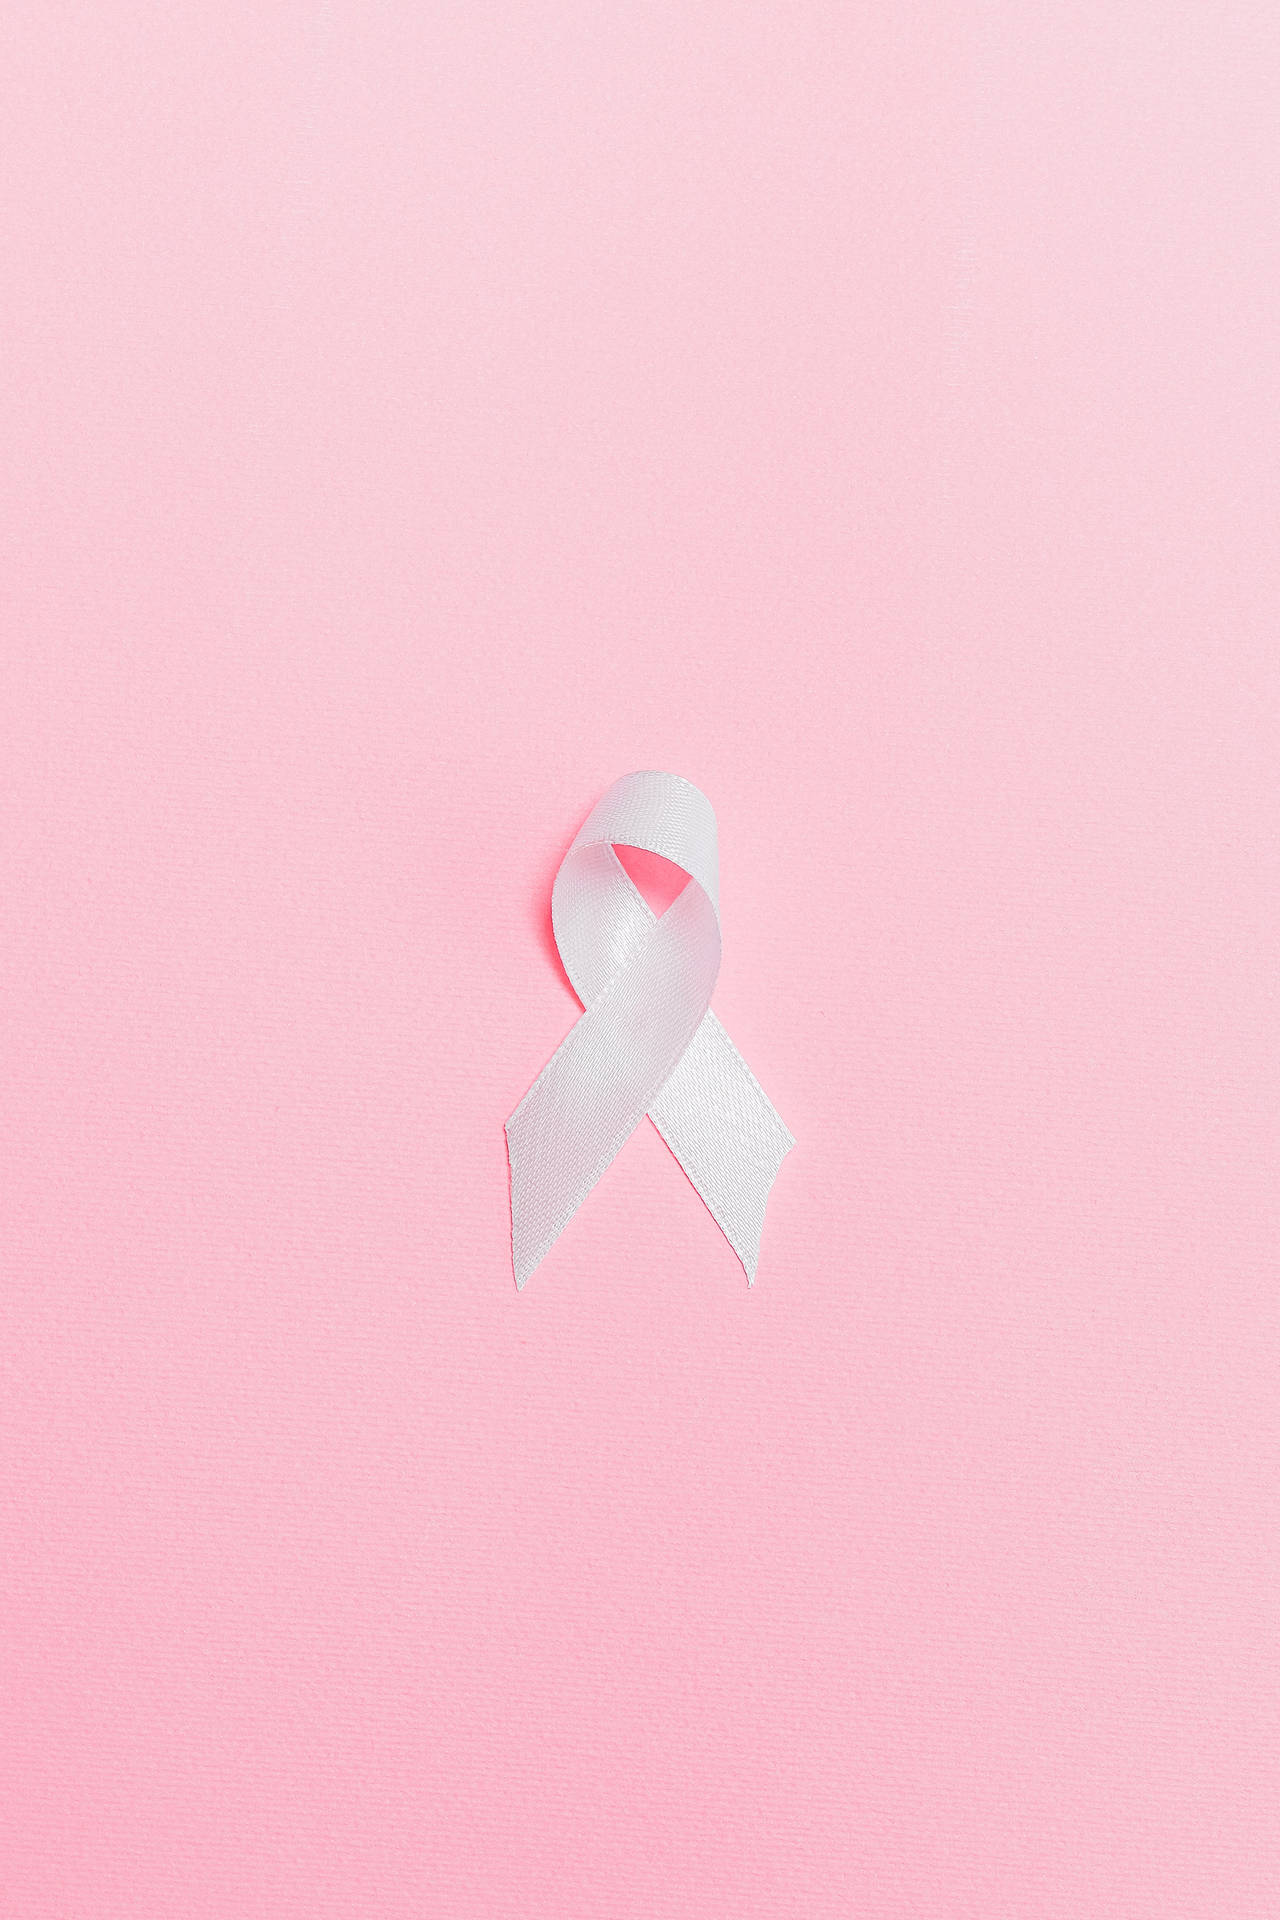 White Ribbon On Pink Background Wallpaper